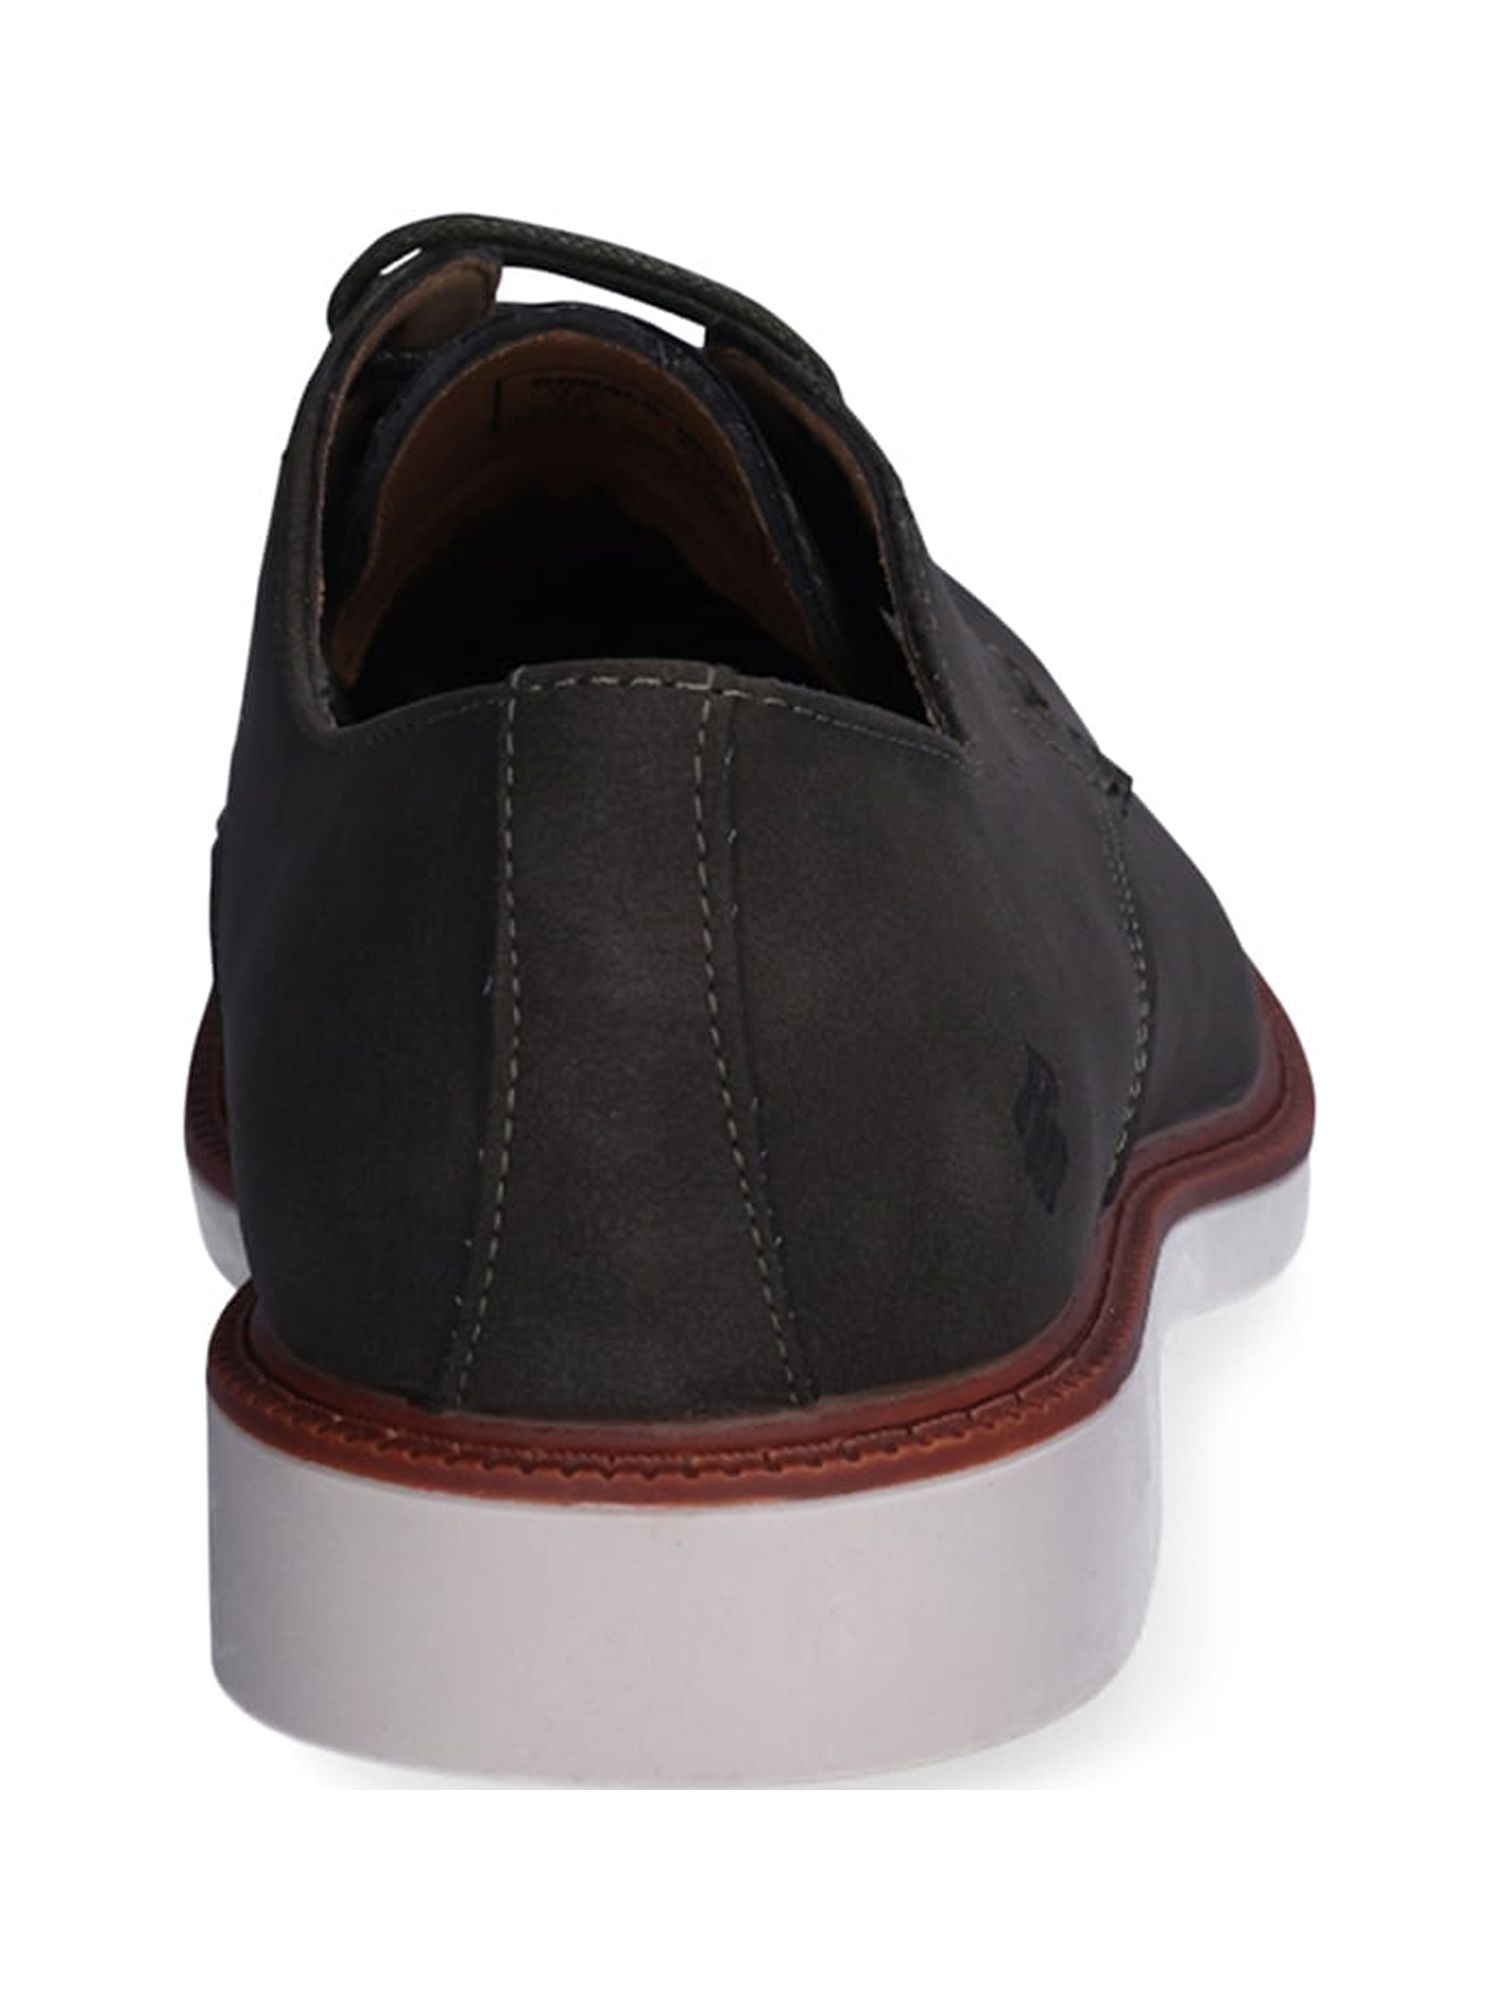 Rocawear Men's Donald Dress Shoe - image 3 of 6